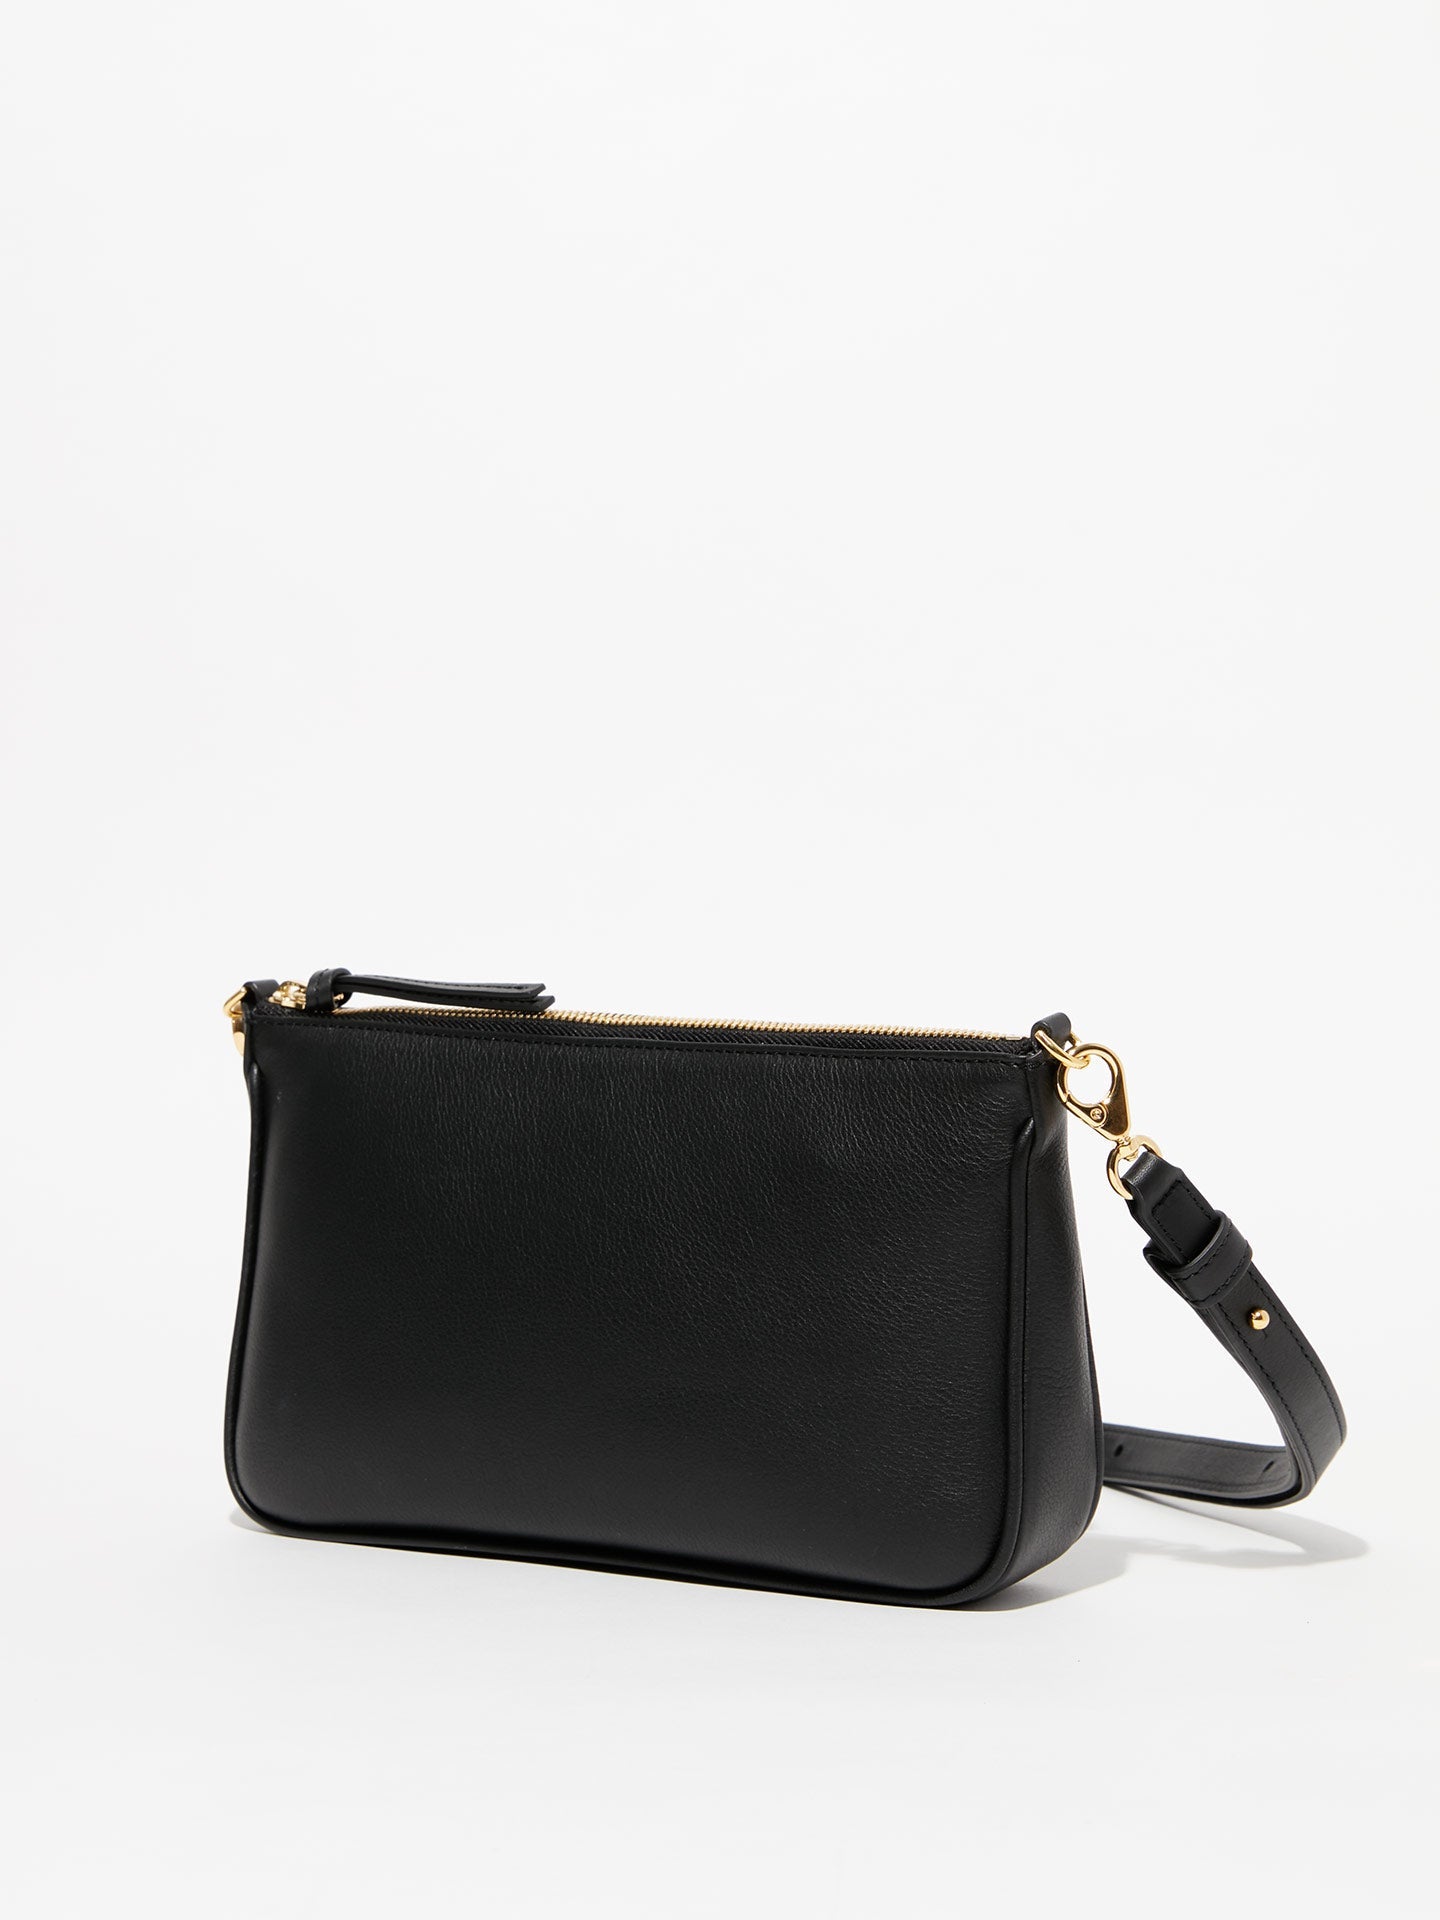 Fendi Baguette Chain Shoulder Bag in Black Nappa Leather – Coco